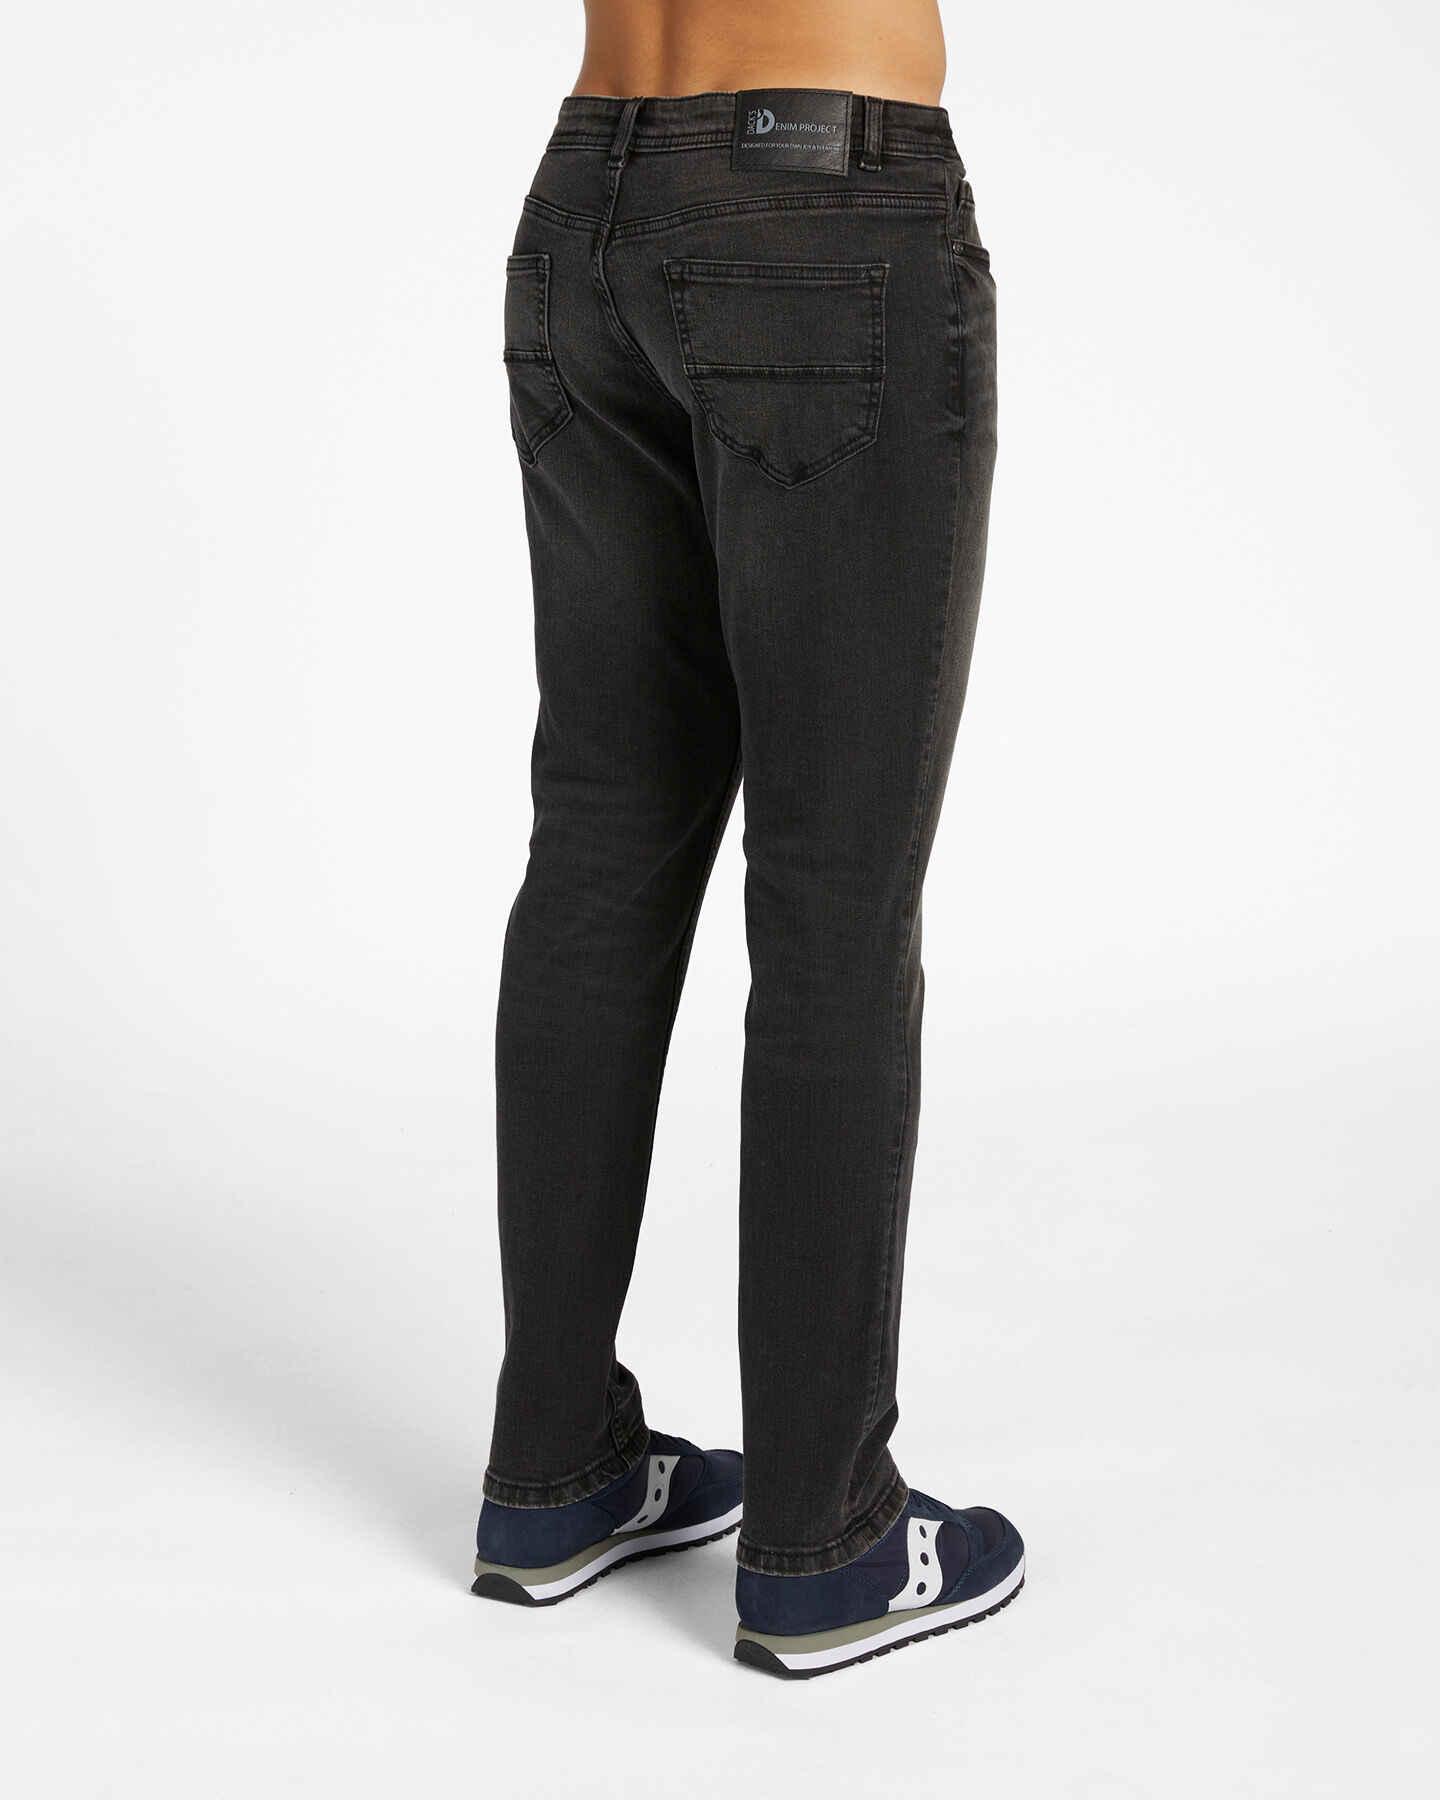  Jeans DACK'S CASUAL CITY M S4106792|DD|42 scatto 1